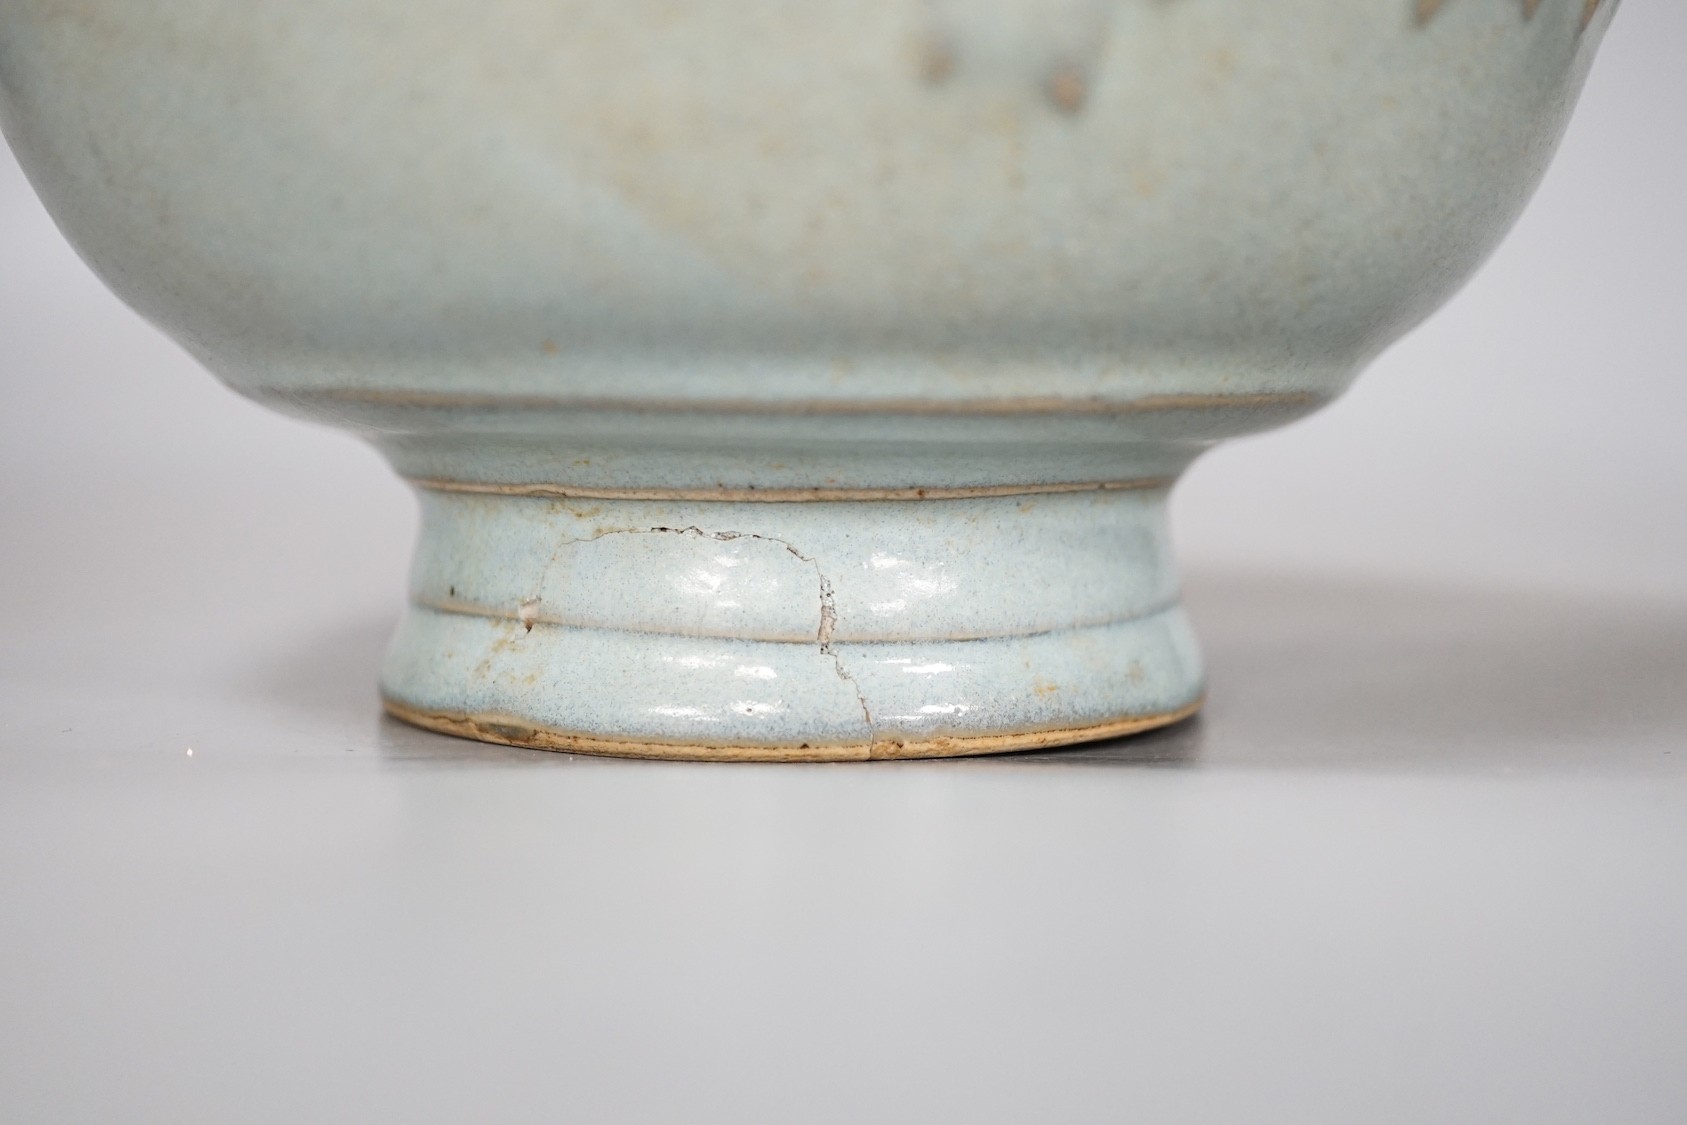 A Chinese blue Jun type bowl - 10cm tall